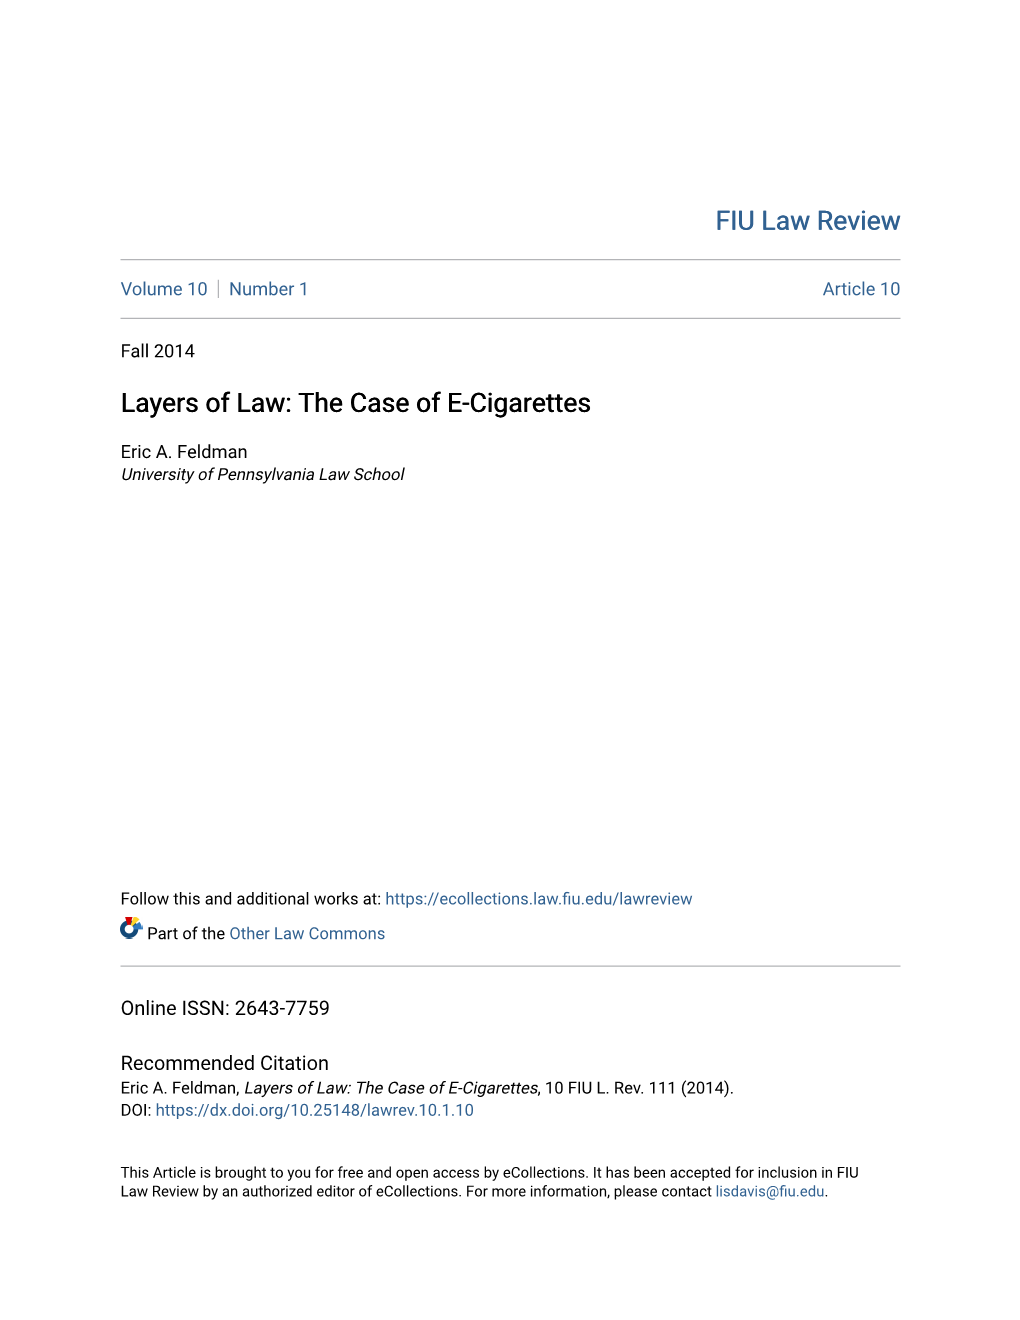 Layers of Law: the Case of E-Cigarettes